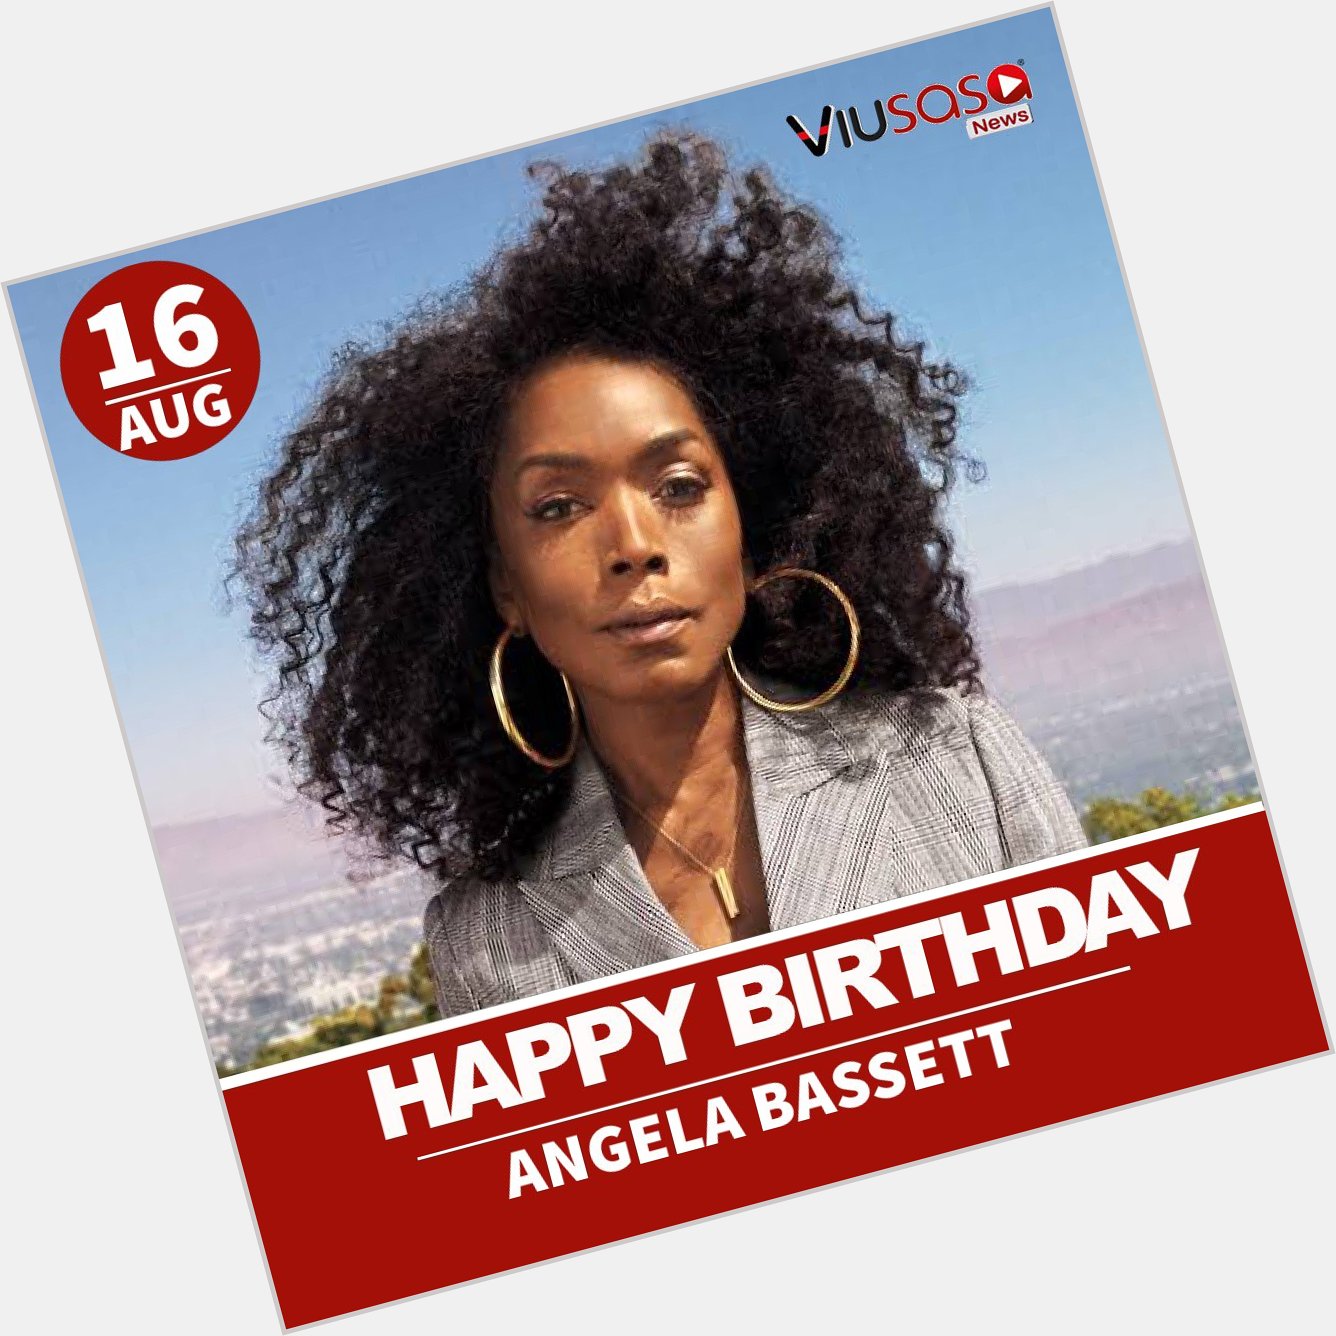 Happy Birthday to the Incredible Actress Angela Bassett  